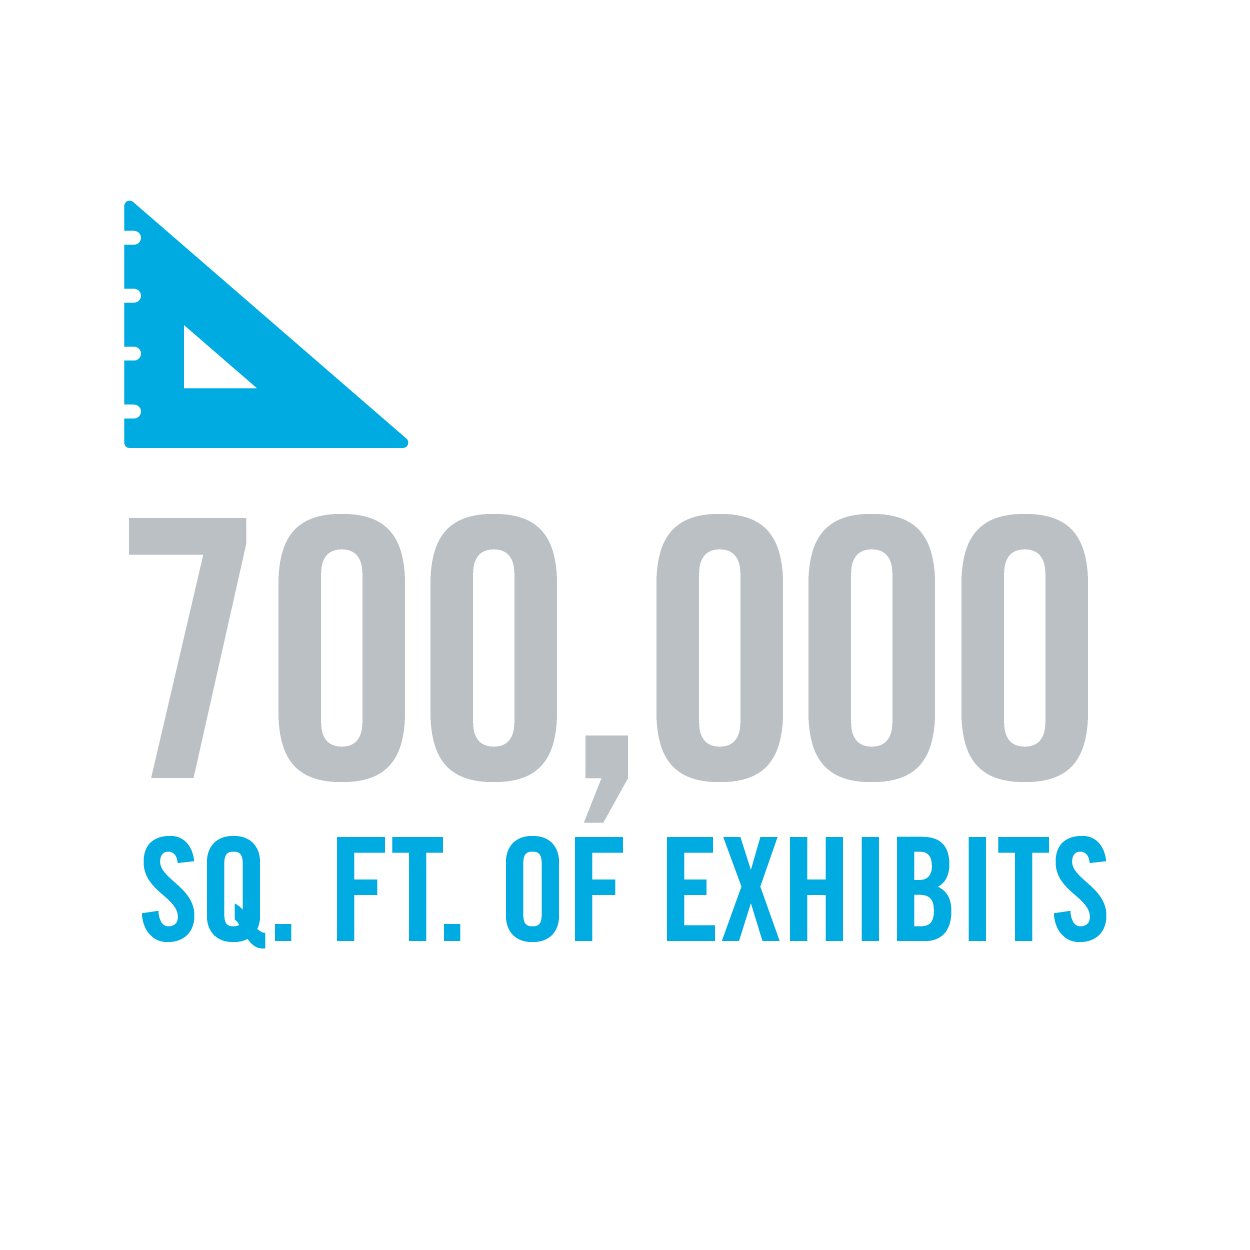 600,000 square feet of exhibits